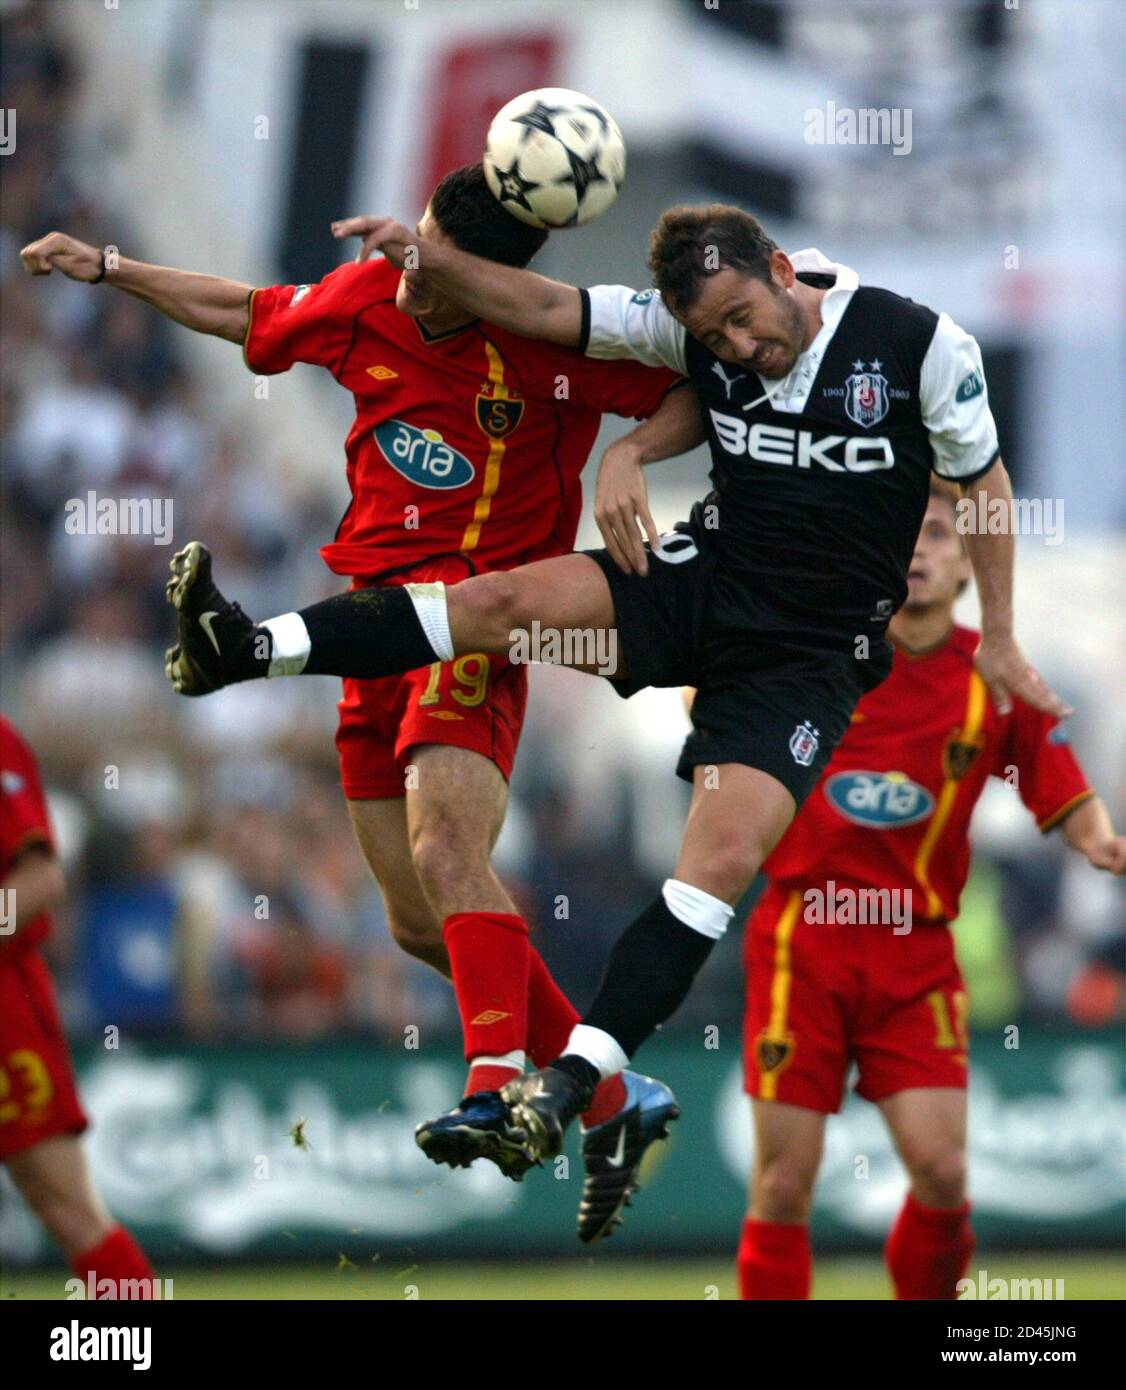 Besiktas midfielder Sergen Yalcin (R) and Galatasaray midfielder Cihan  Haspolatli (L) jump for a header in their Turkish Super League derby match  in Istanbul May 25, 2003. Besiktas clinched their first Turkish